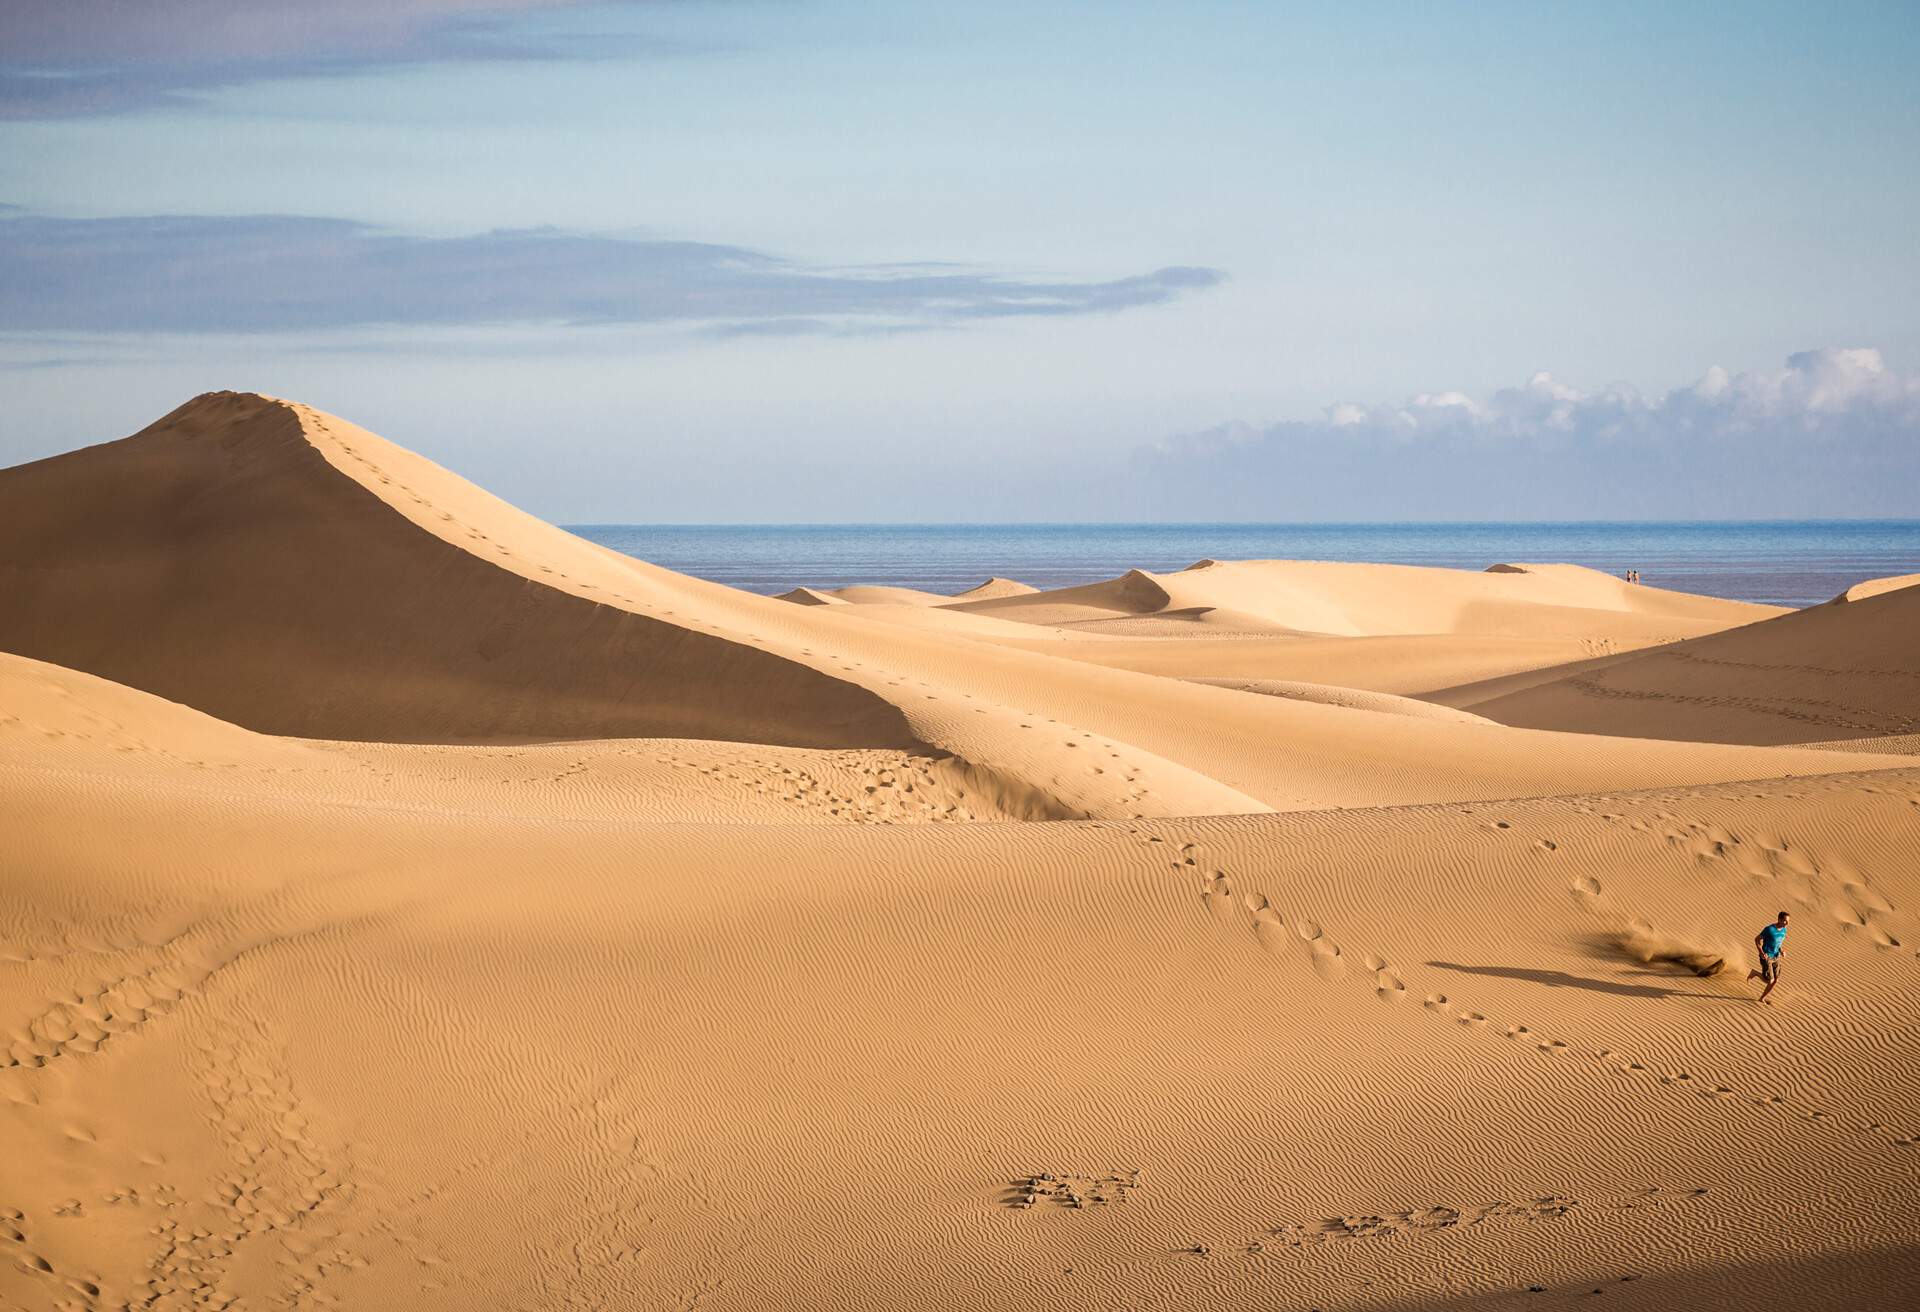 Sand dunes of Maspalomas, Gran Canaria, Spain